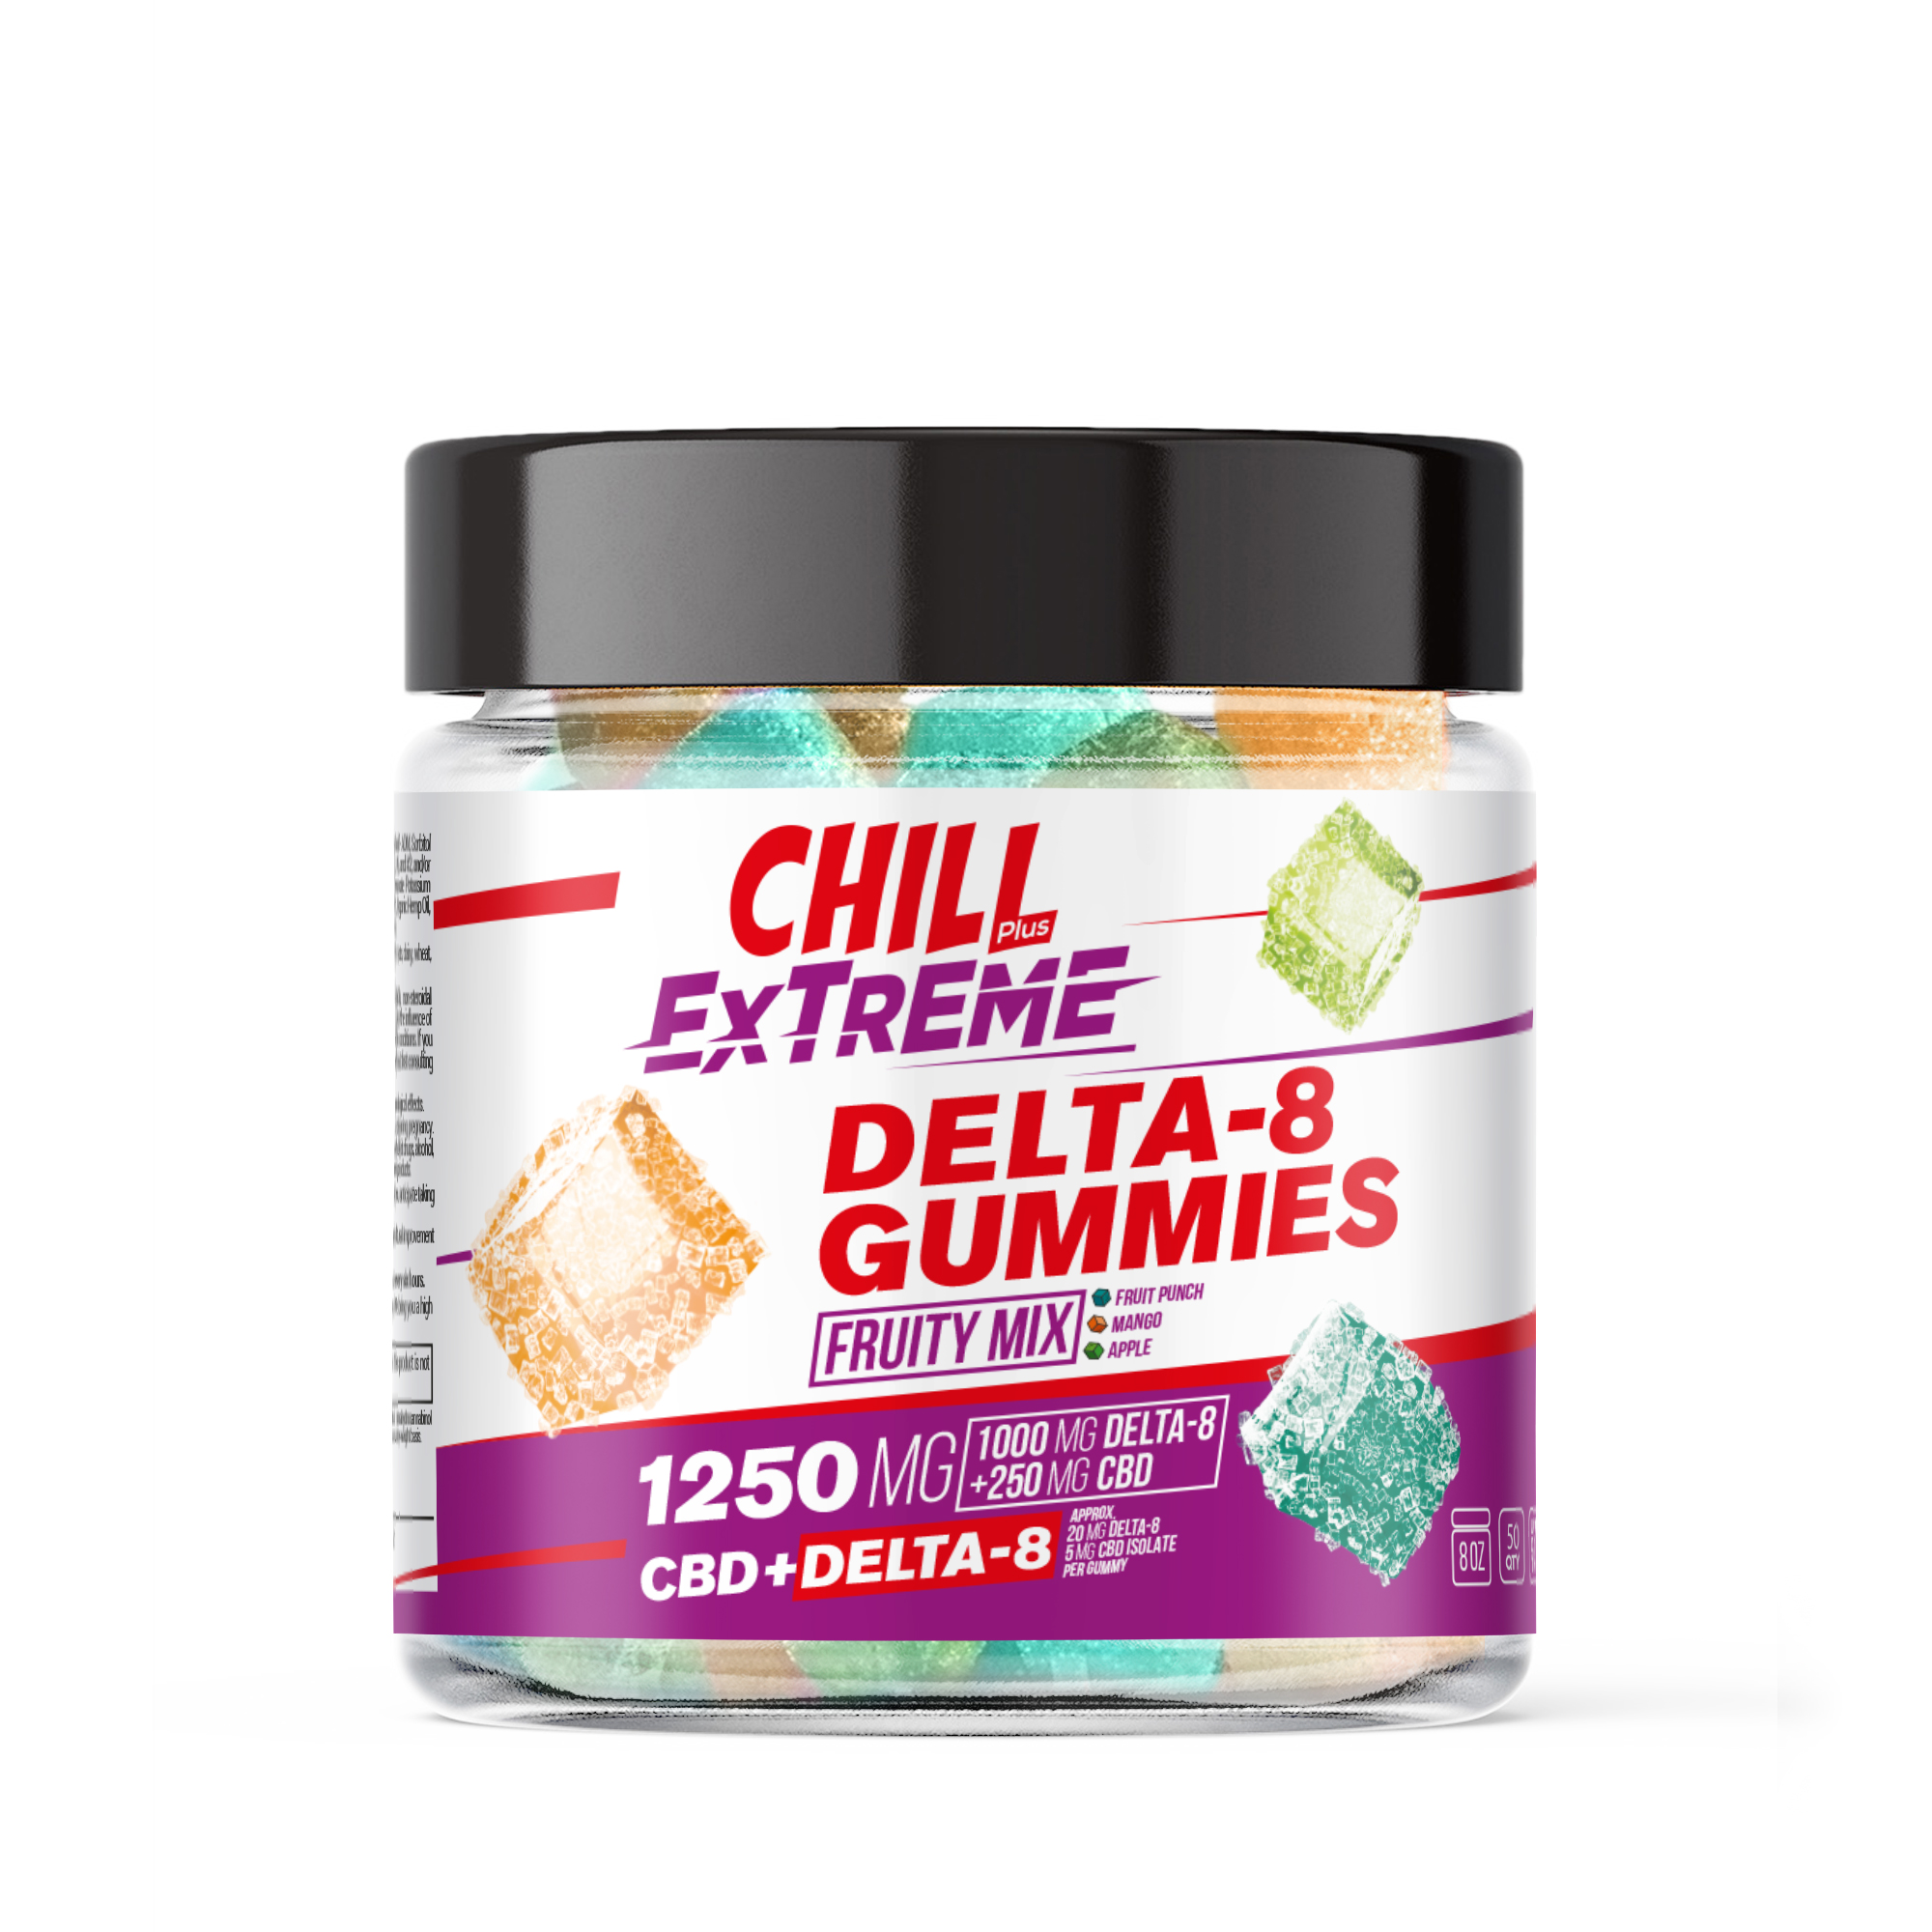 Chill Plus CBD & Delta-8 Extreme Fruity Mix Gummies - 1250X - Diamond CBD